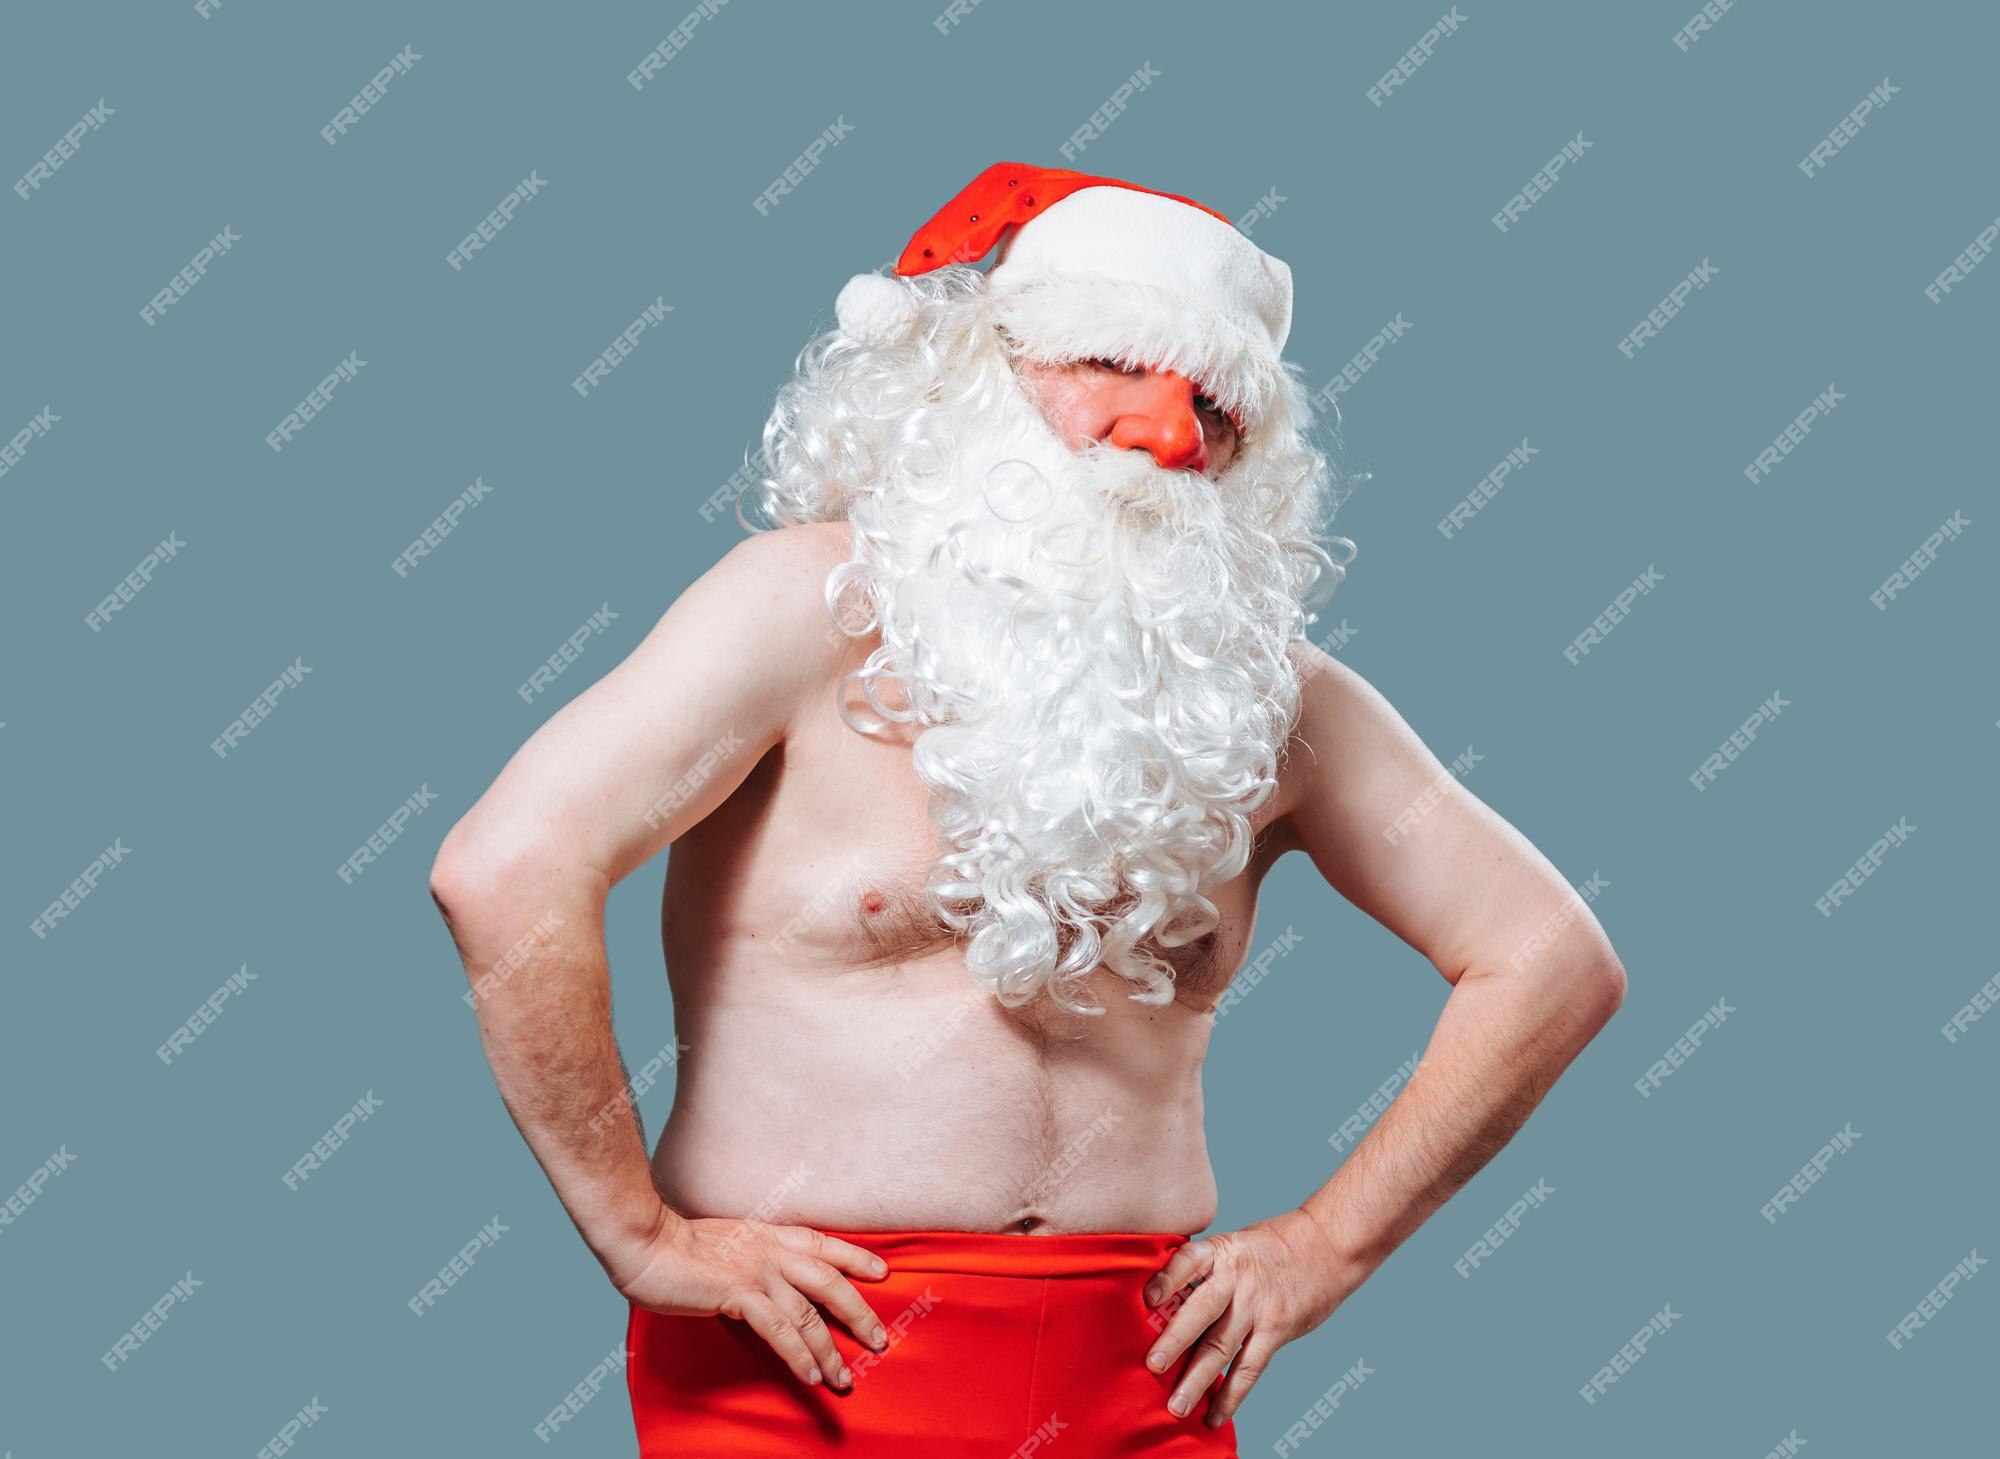 alan liddiard share naked santa pictures photos